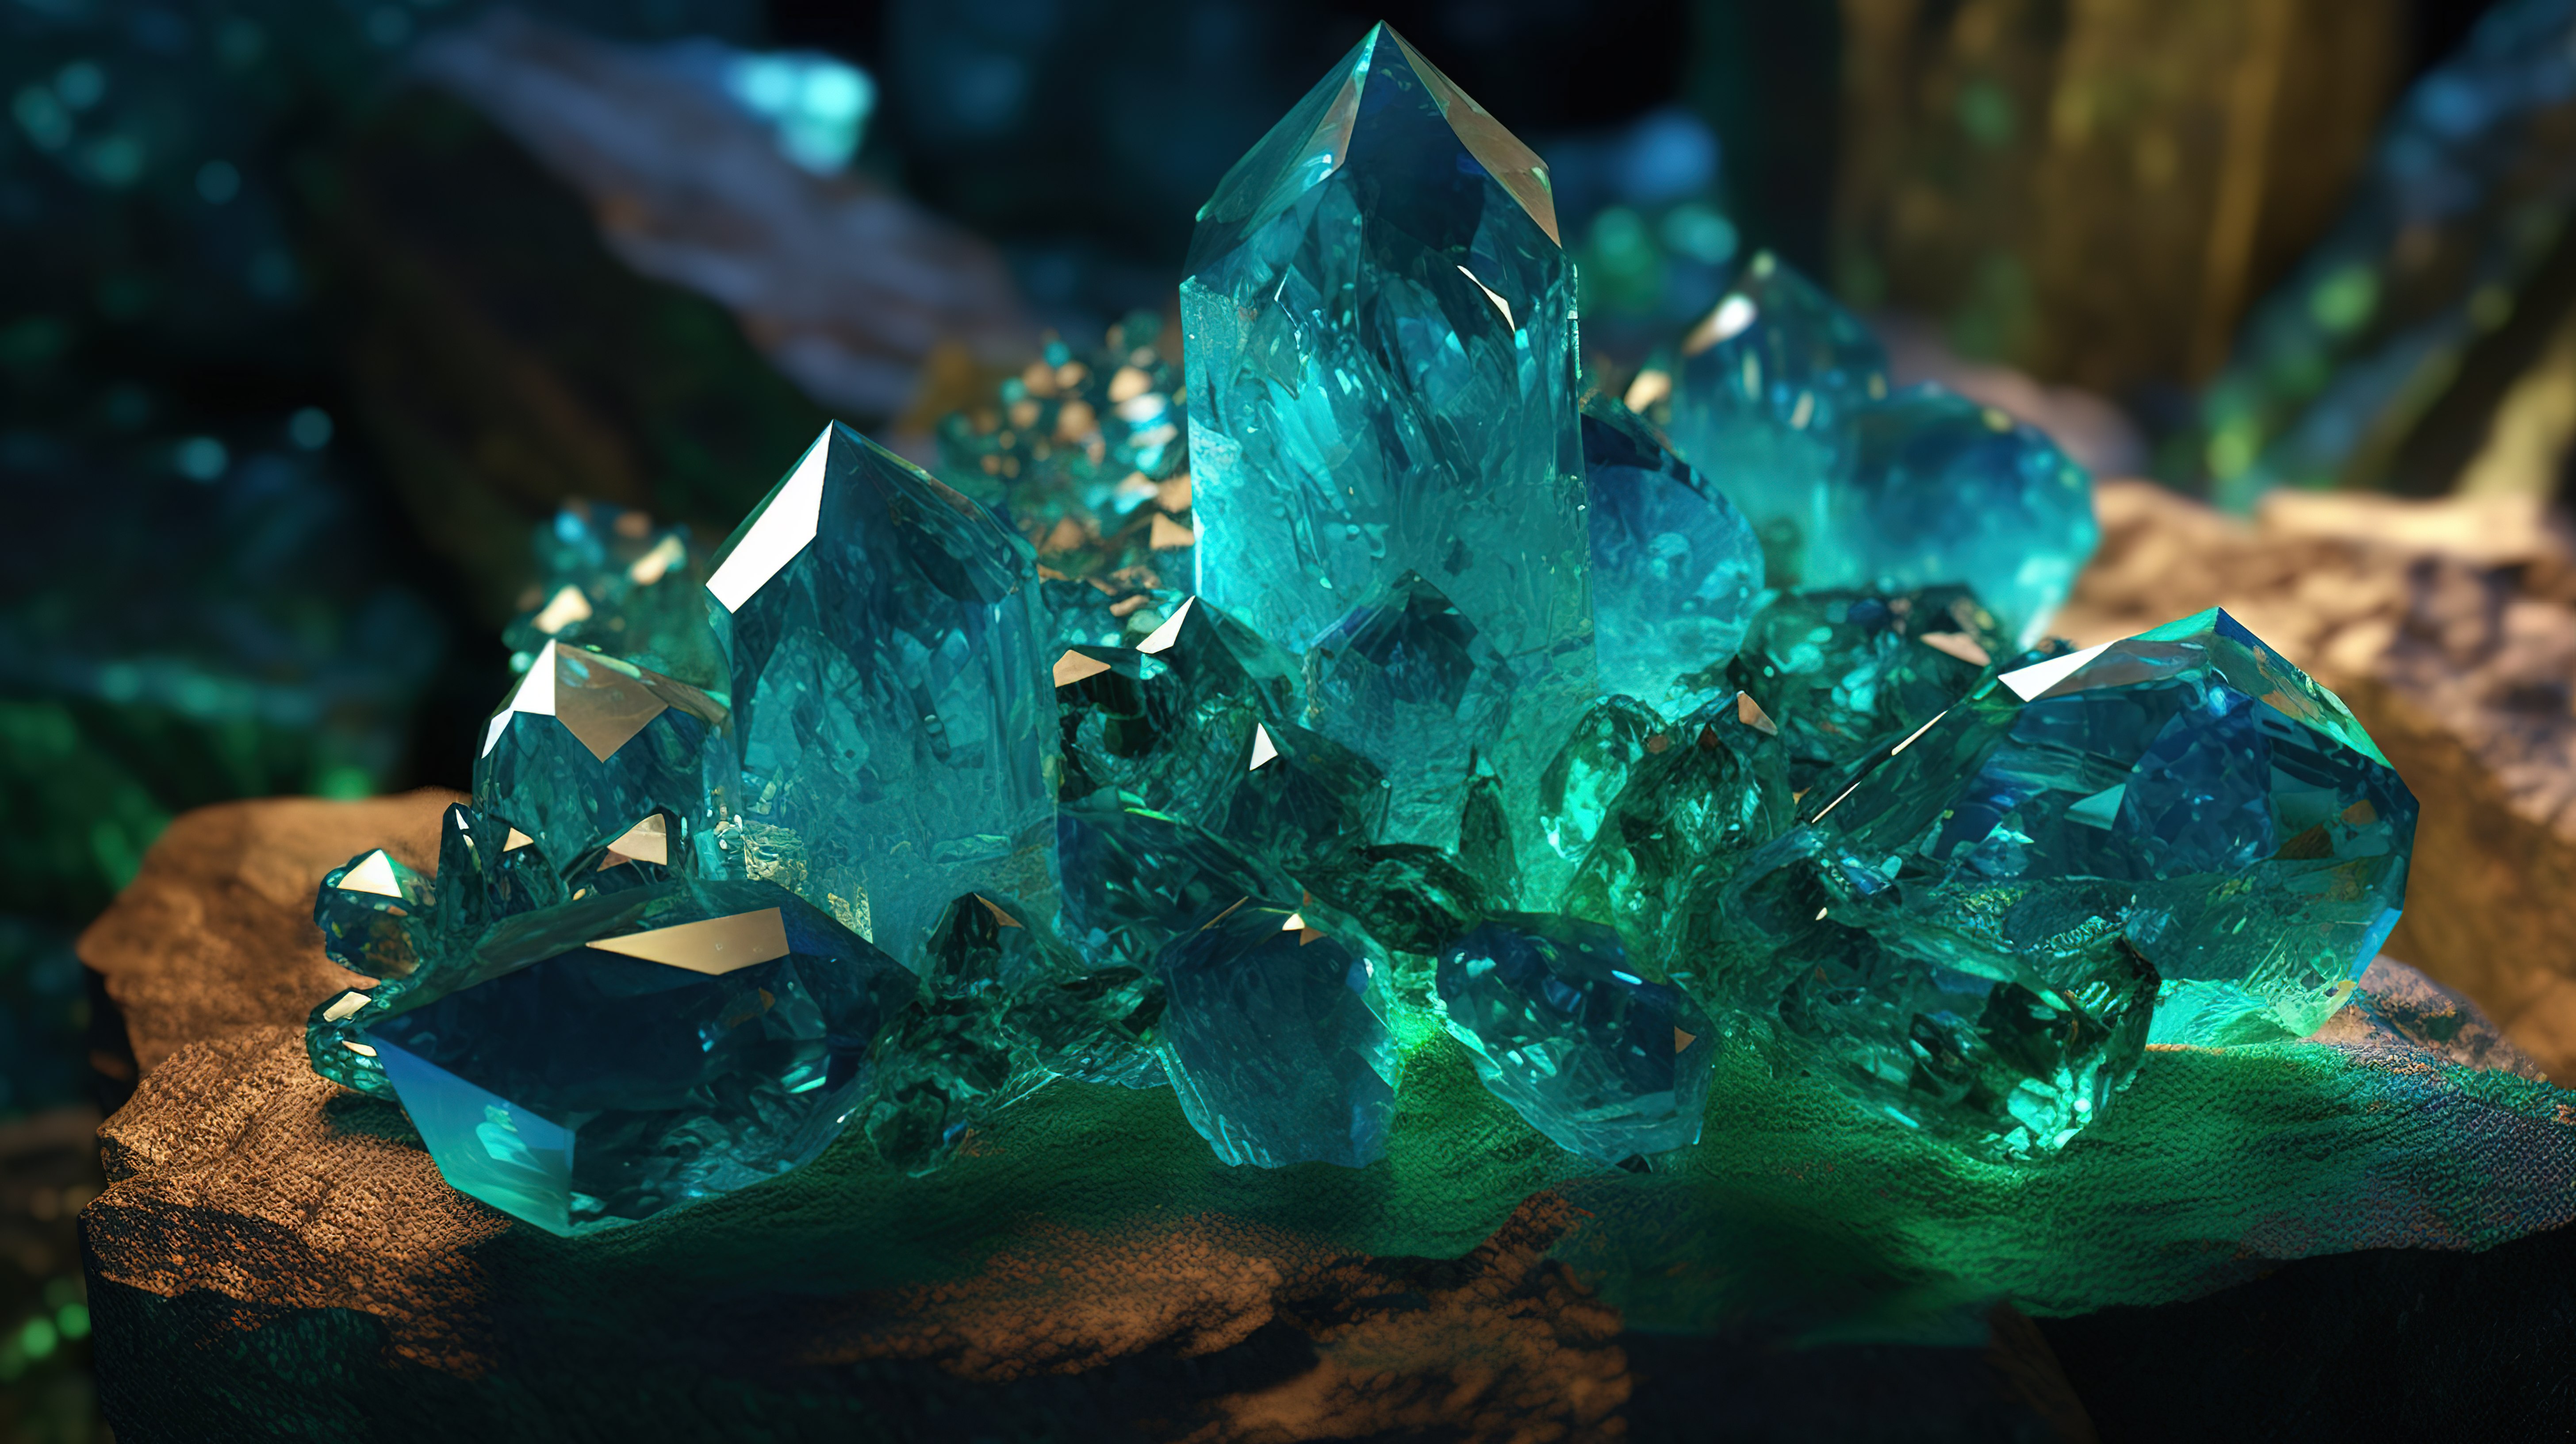 3D 渲染矿山中的一组珍贵的蓝色和绿色水晶宝石图片